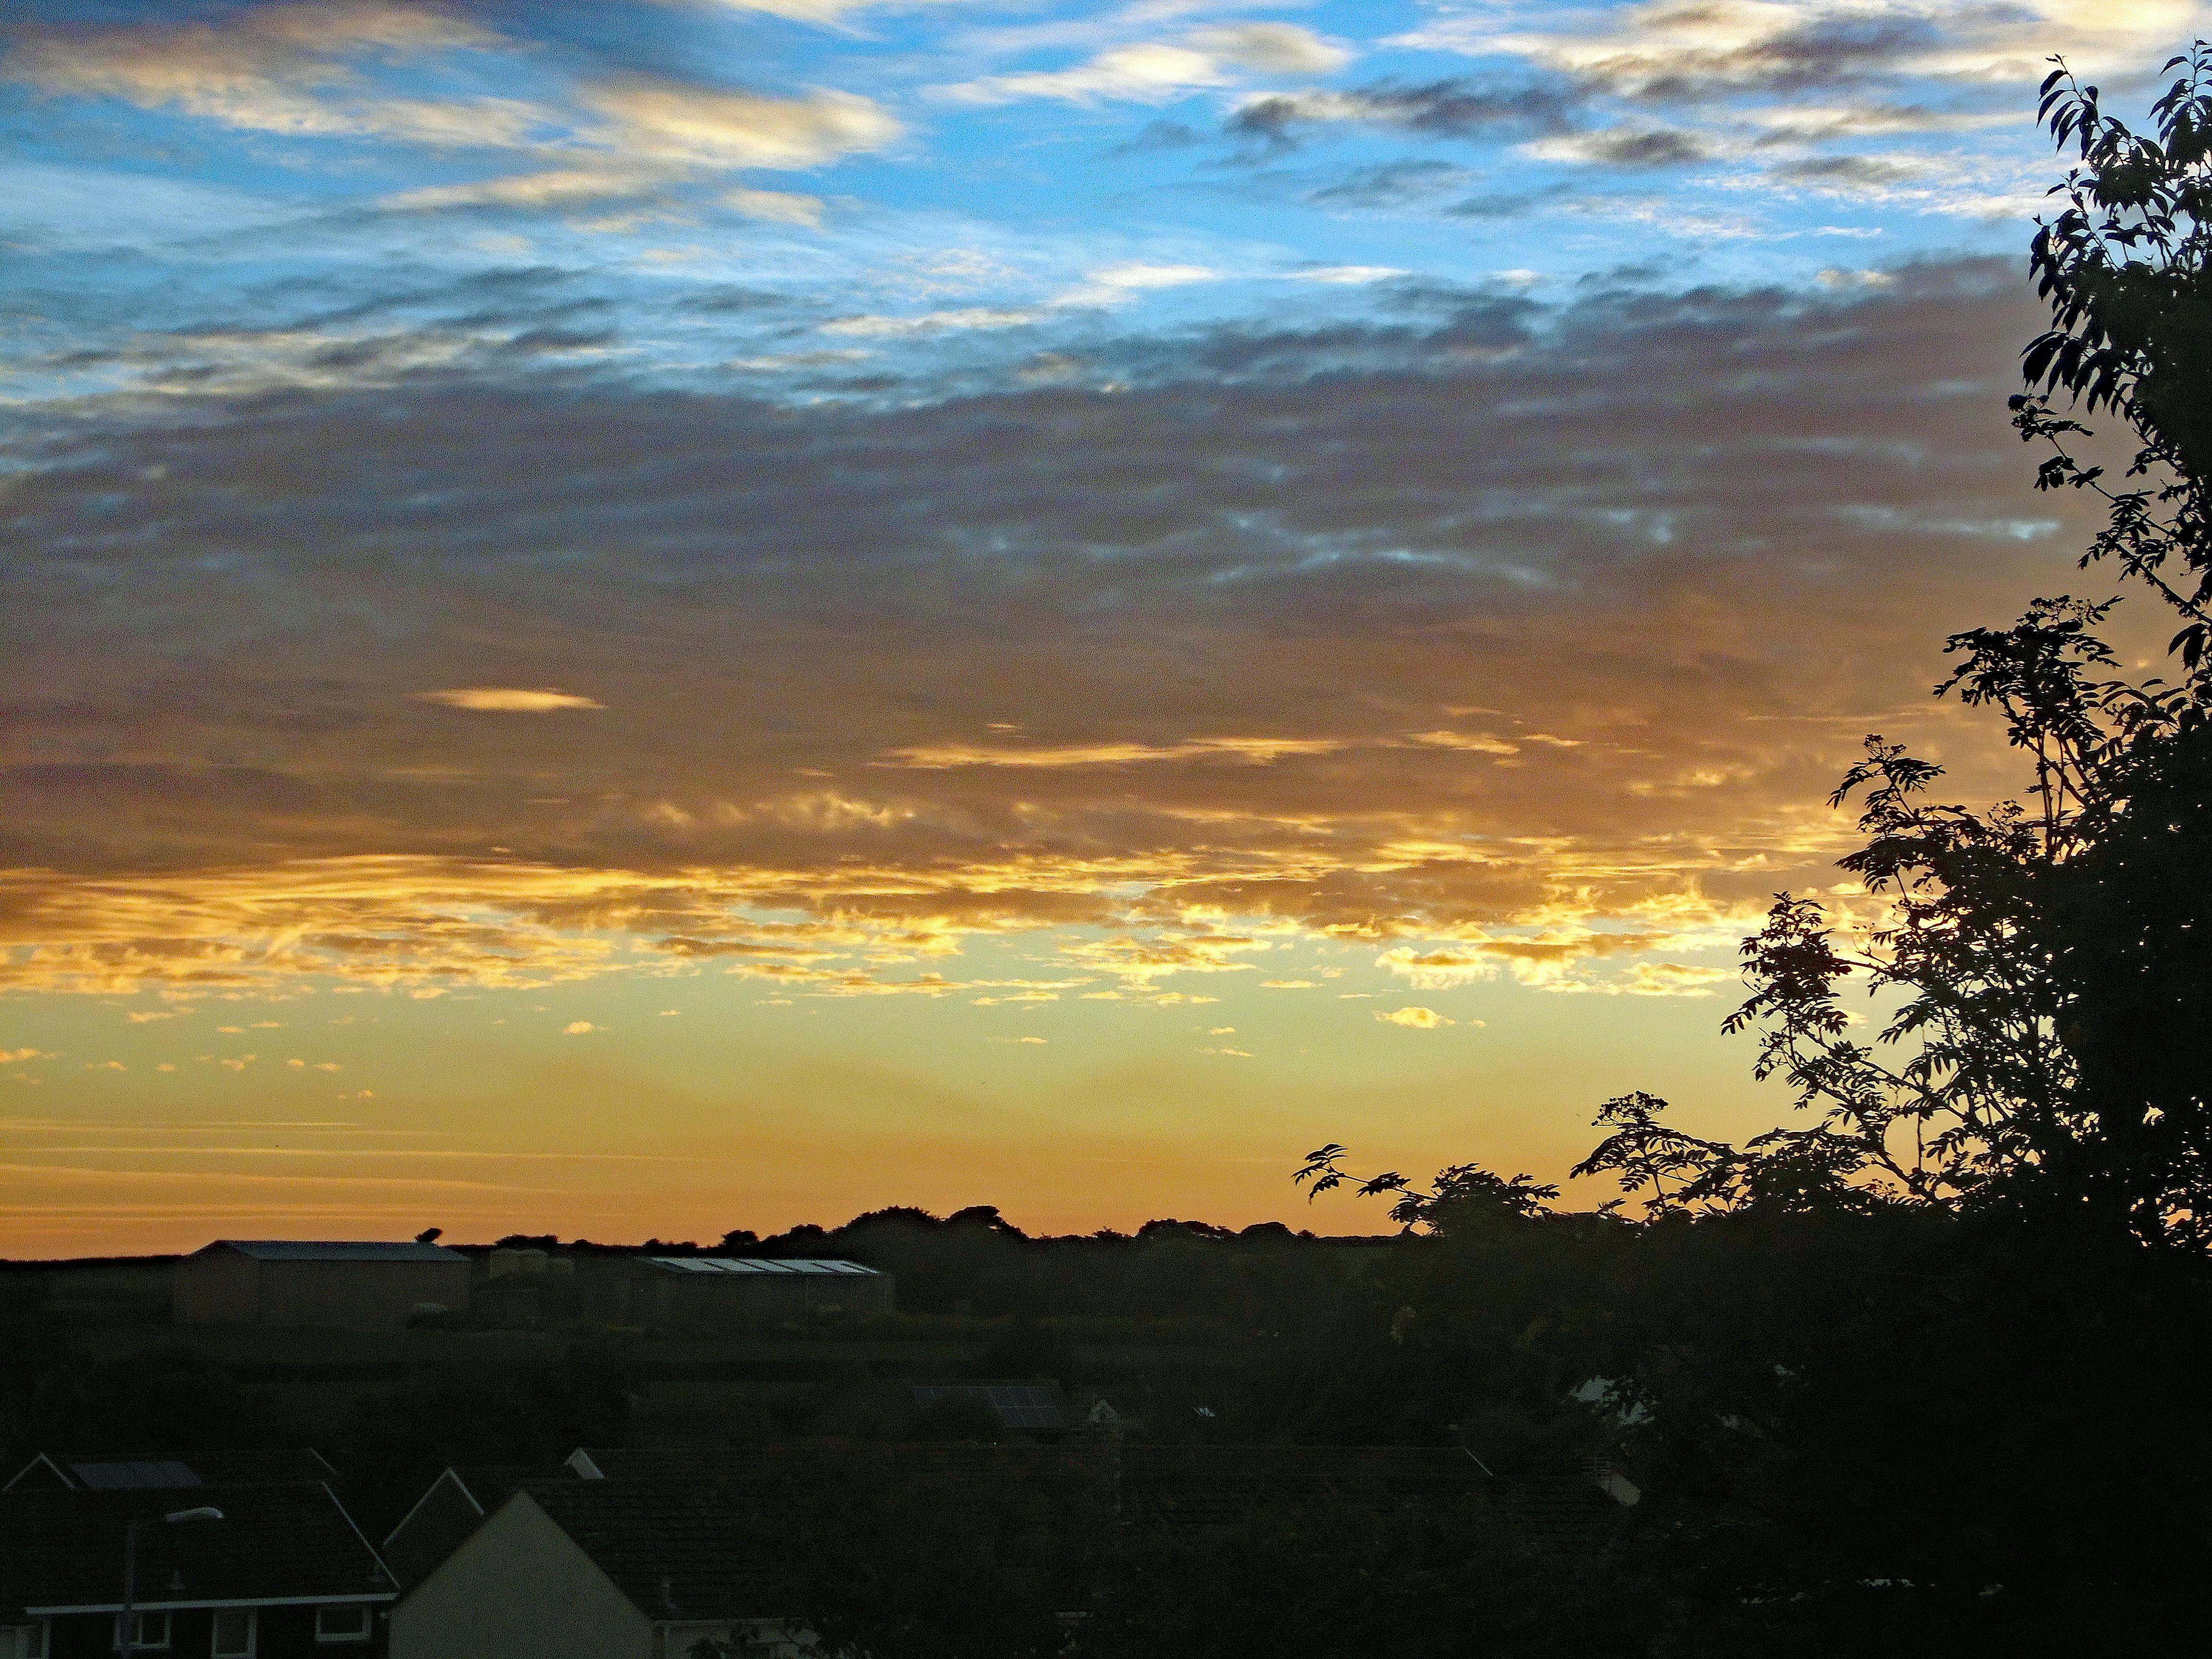 Free stock photo of Sky clouds sunset orange blue white night landscap